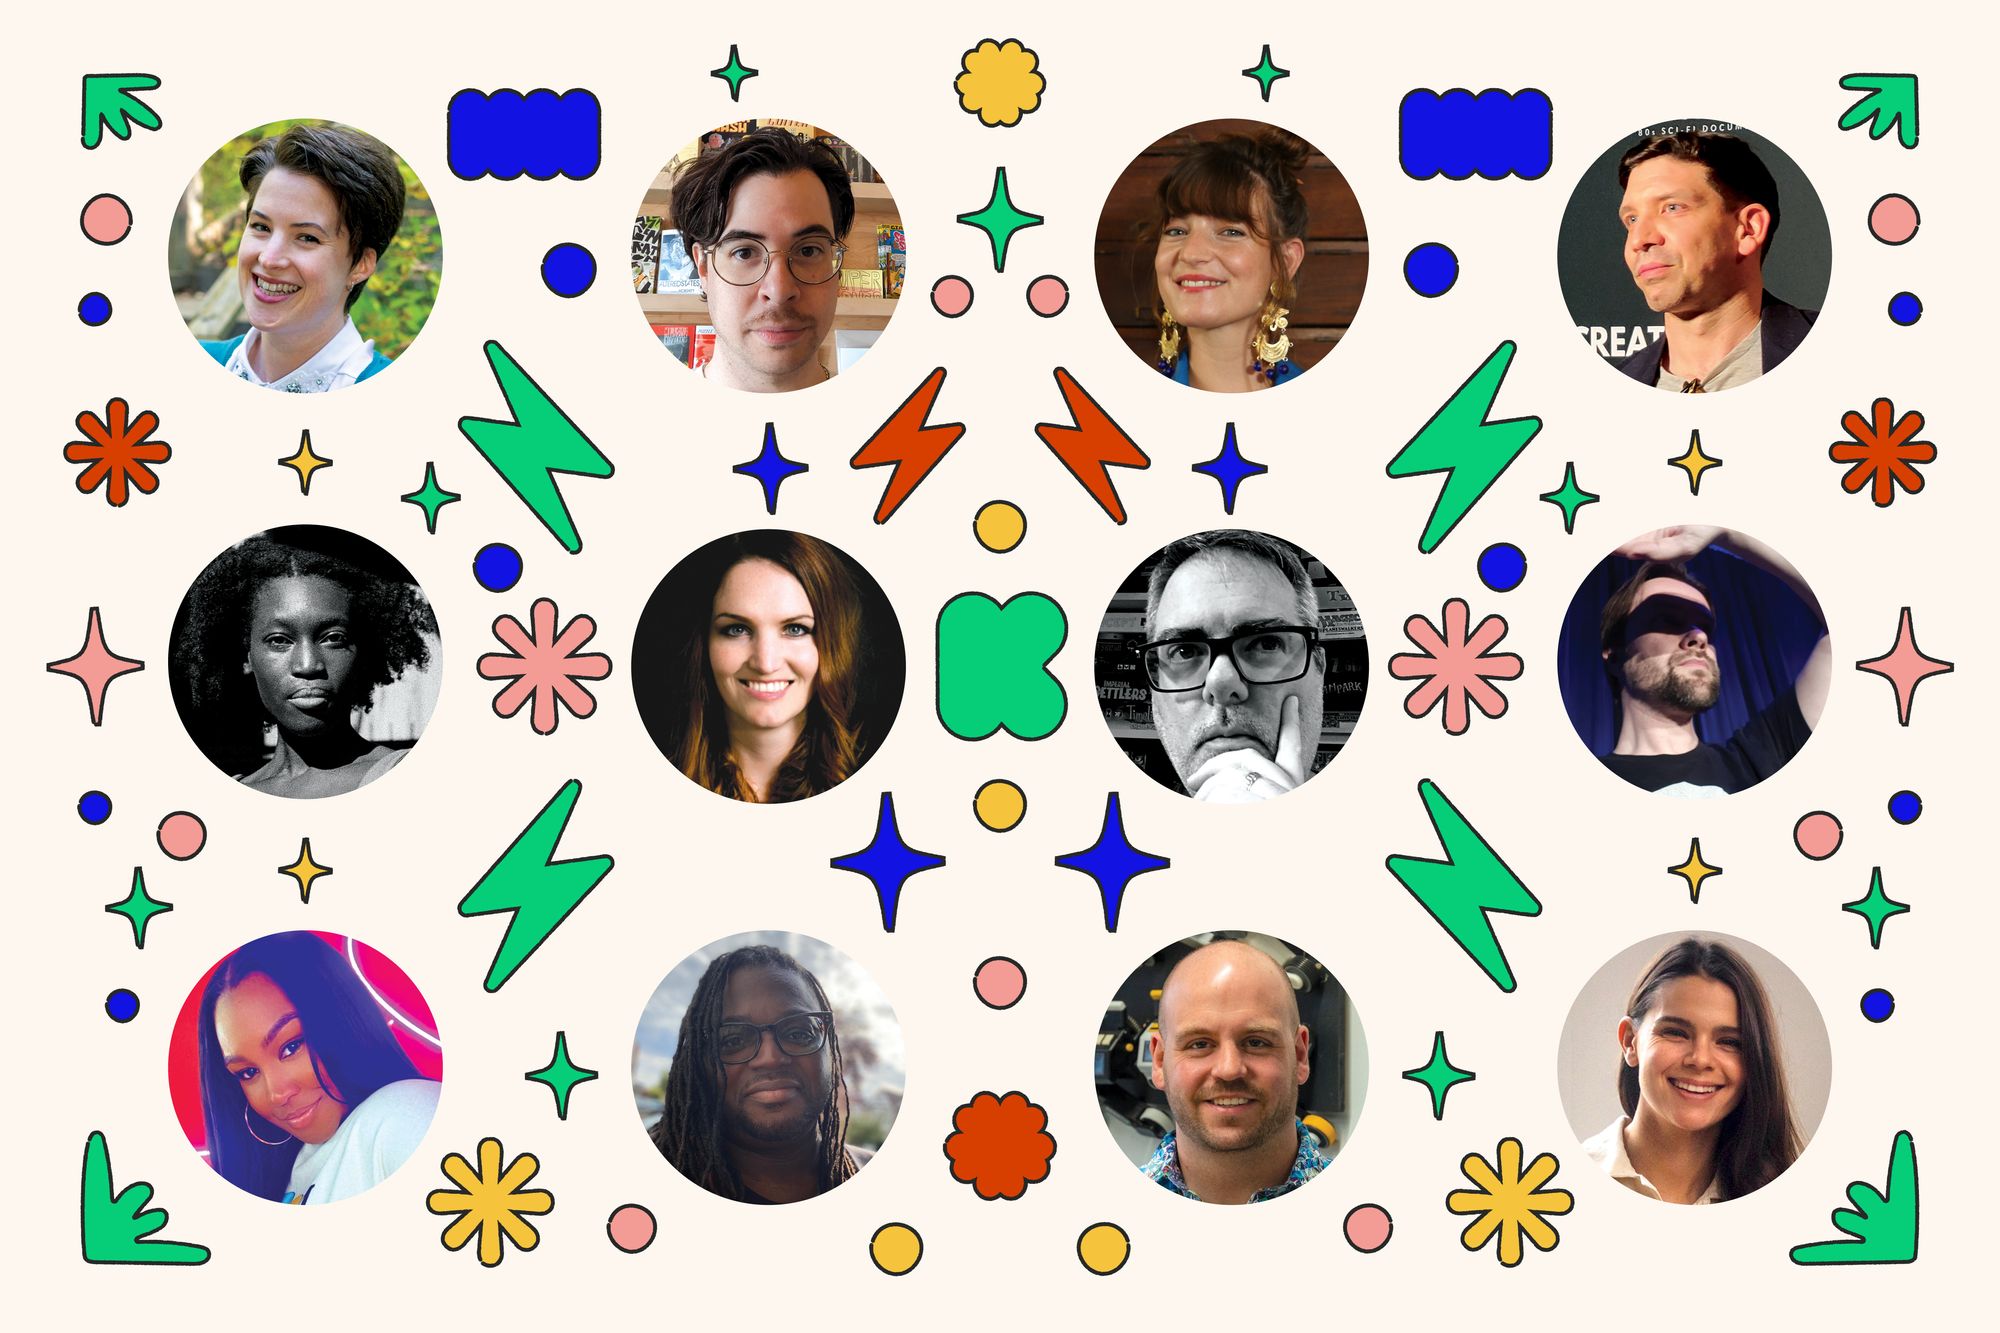 Meet the Members of Kickstarter’s Community Advisory Council